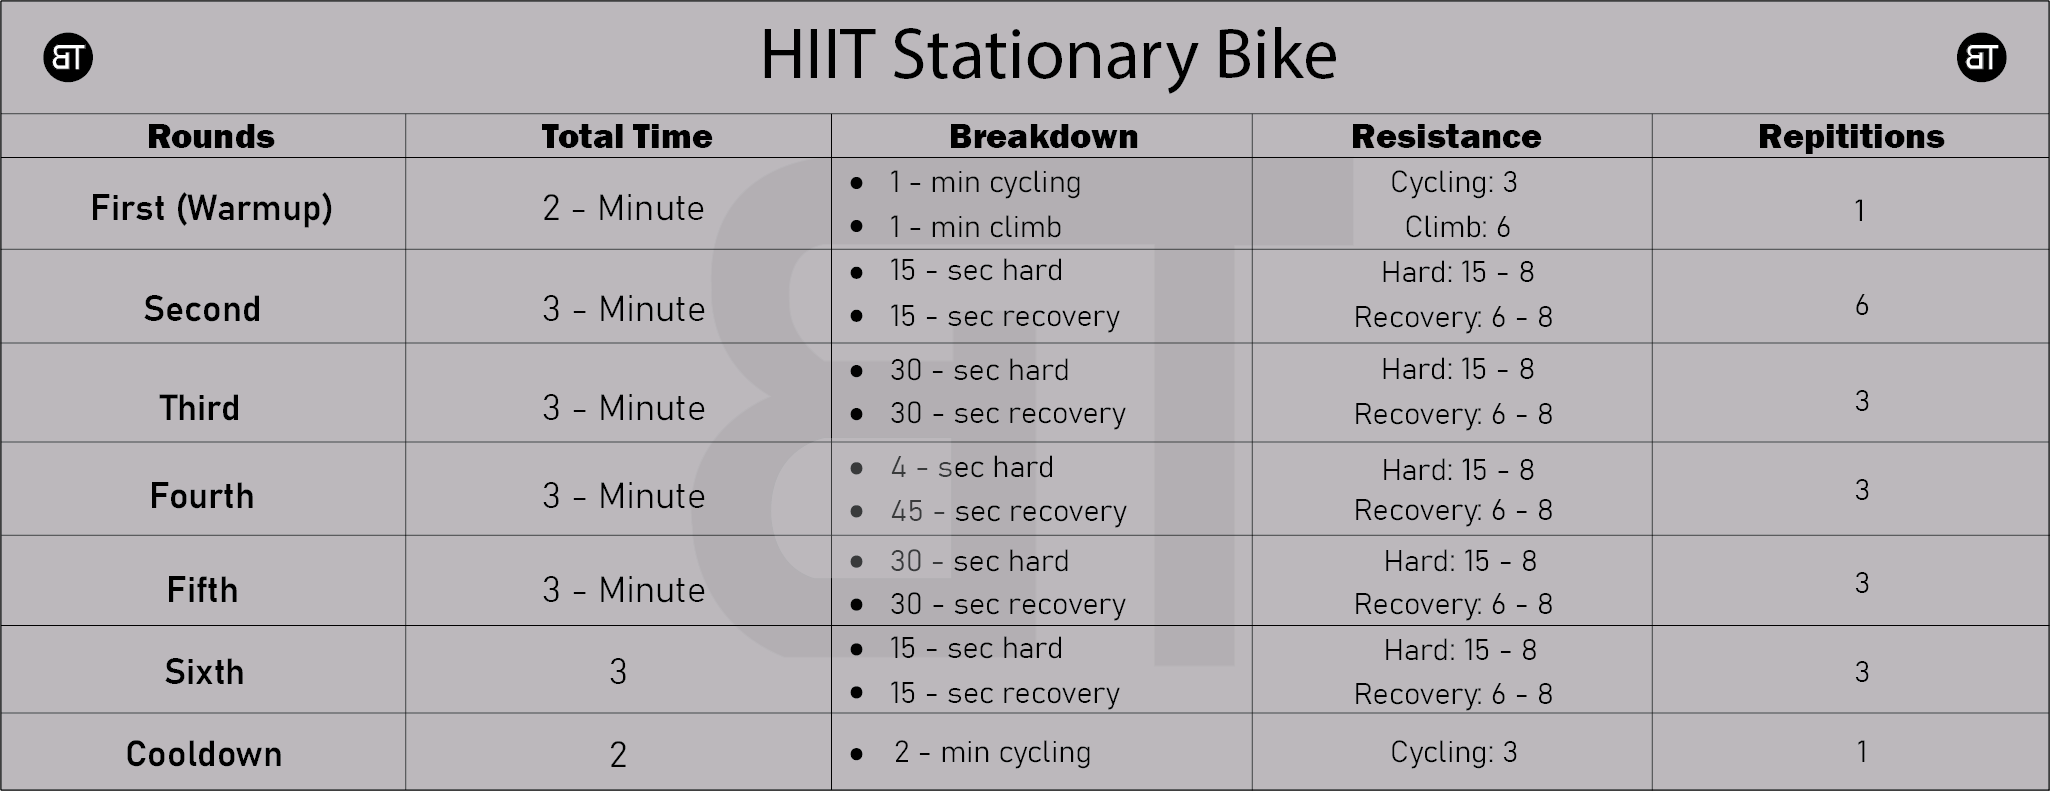 HIIT Stationary Bike Workout